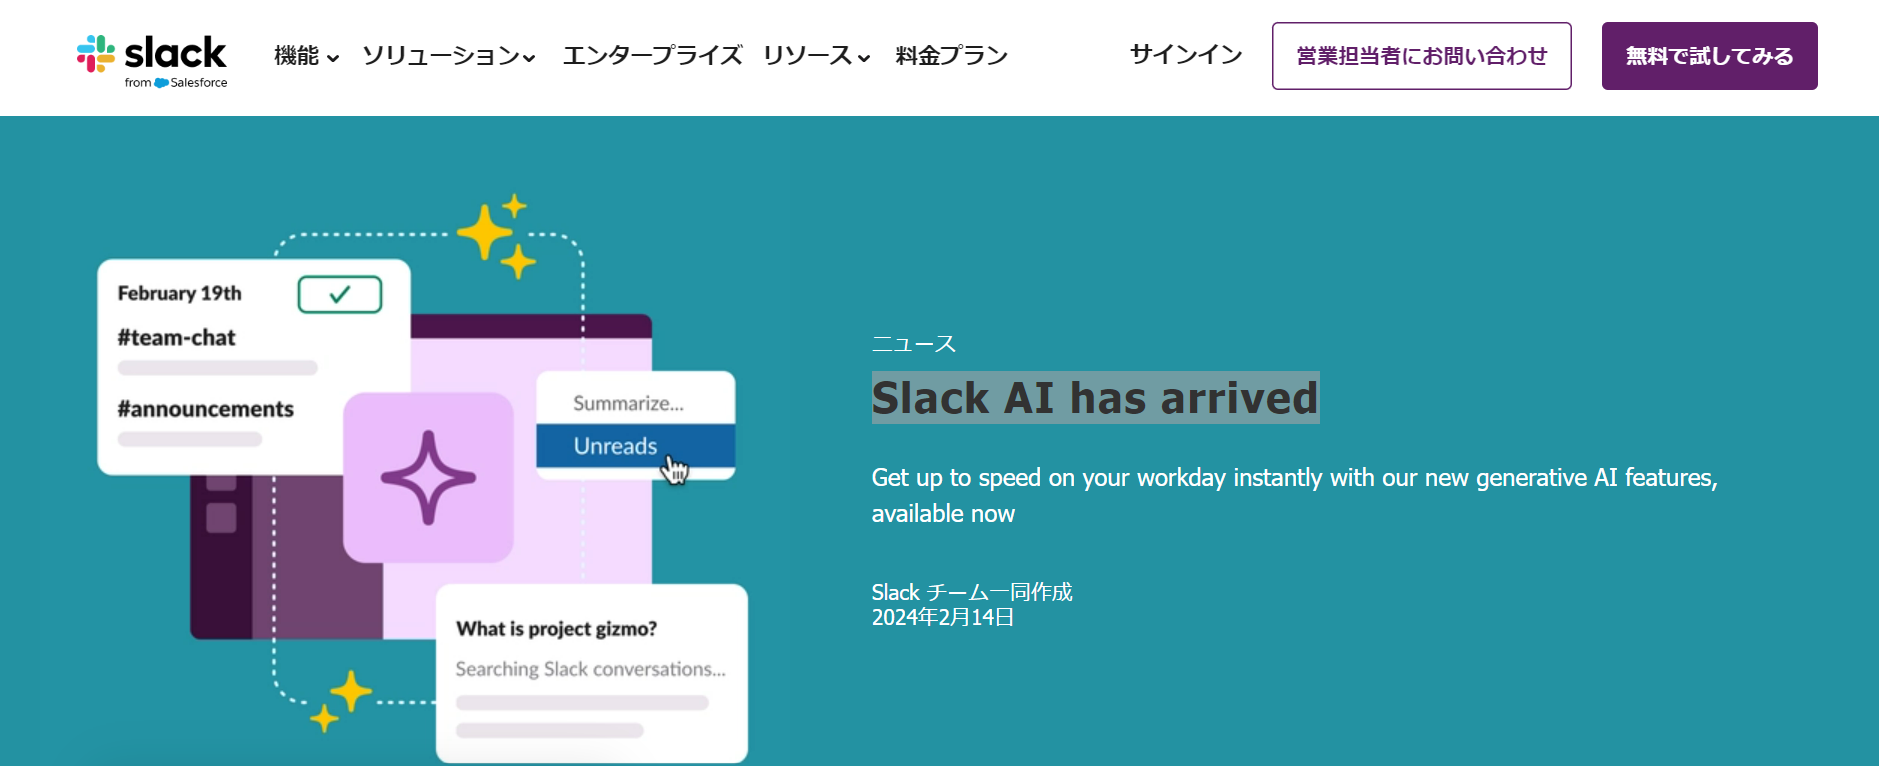 Slack AIを発表したニュース画像